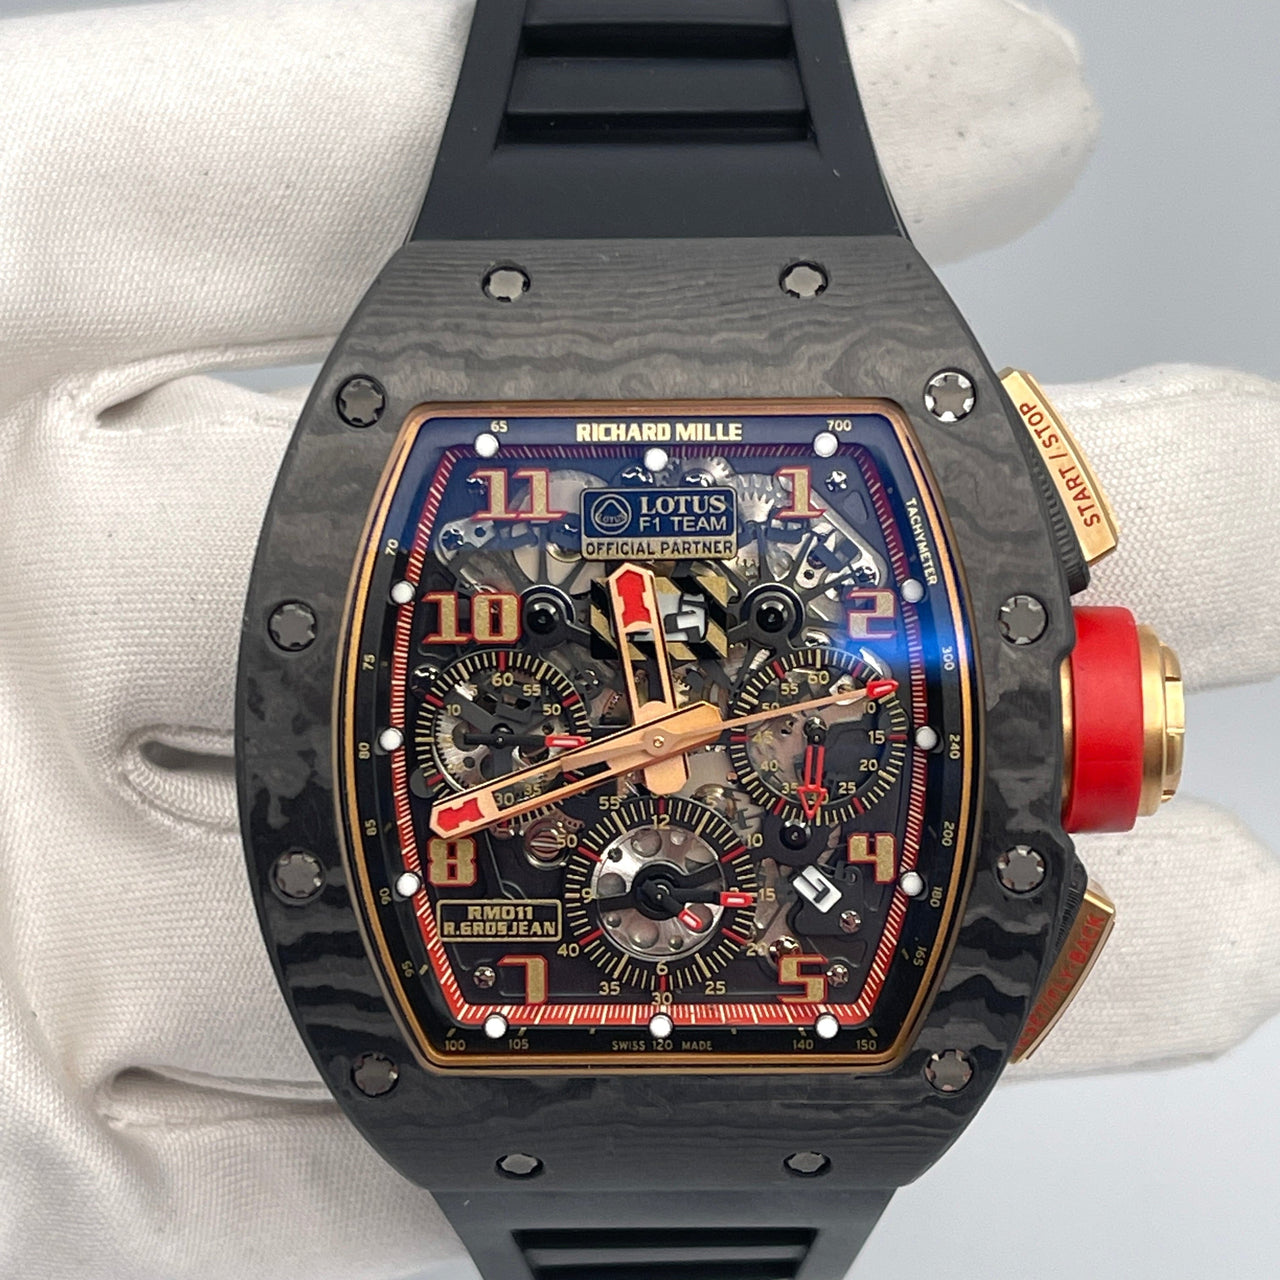 Luxury Watch Richard Mille Romain Grosjean "Lotus F1" Carbon NTPT RM011 Wrist Aficionado